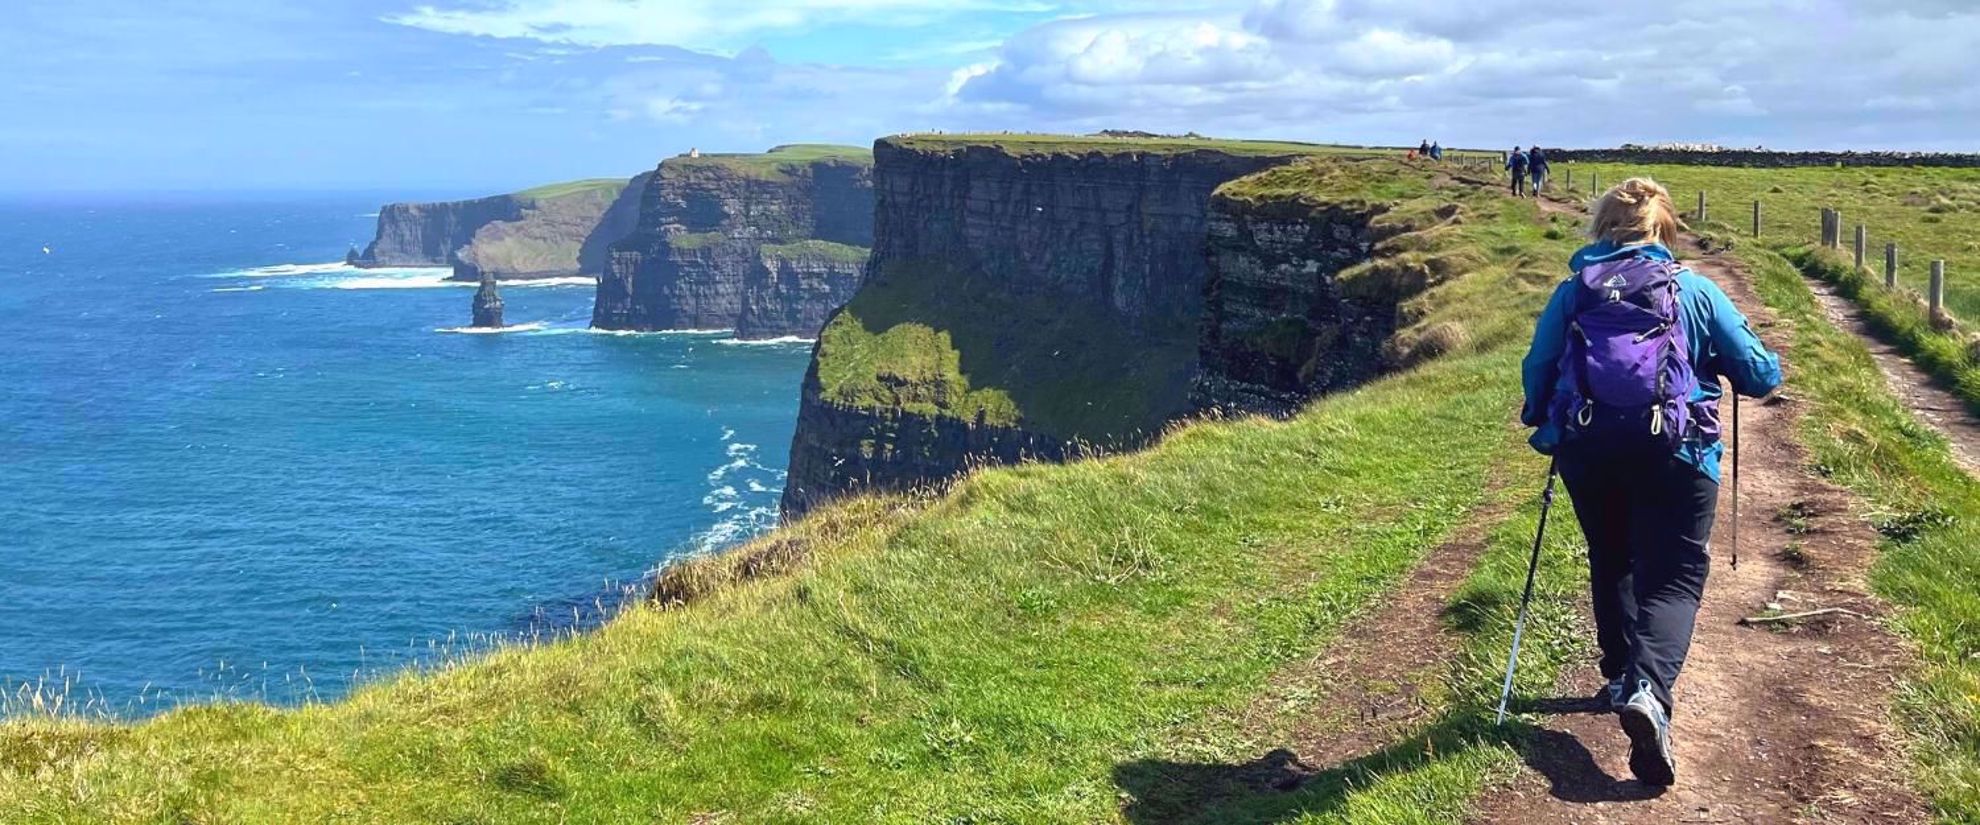 women's hiking tour along the coast of Ireland